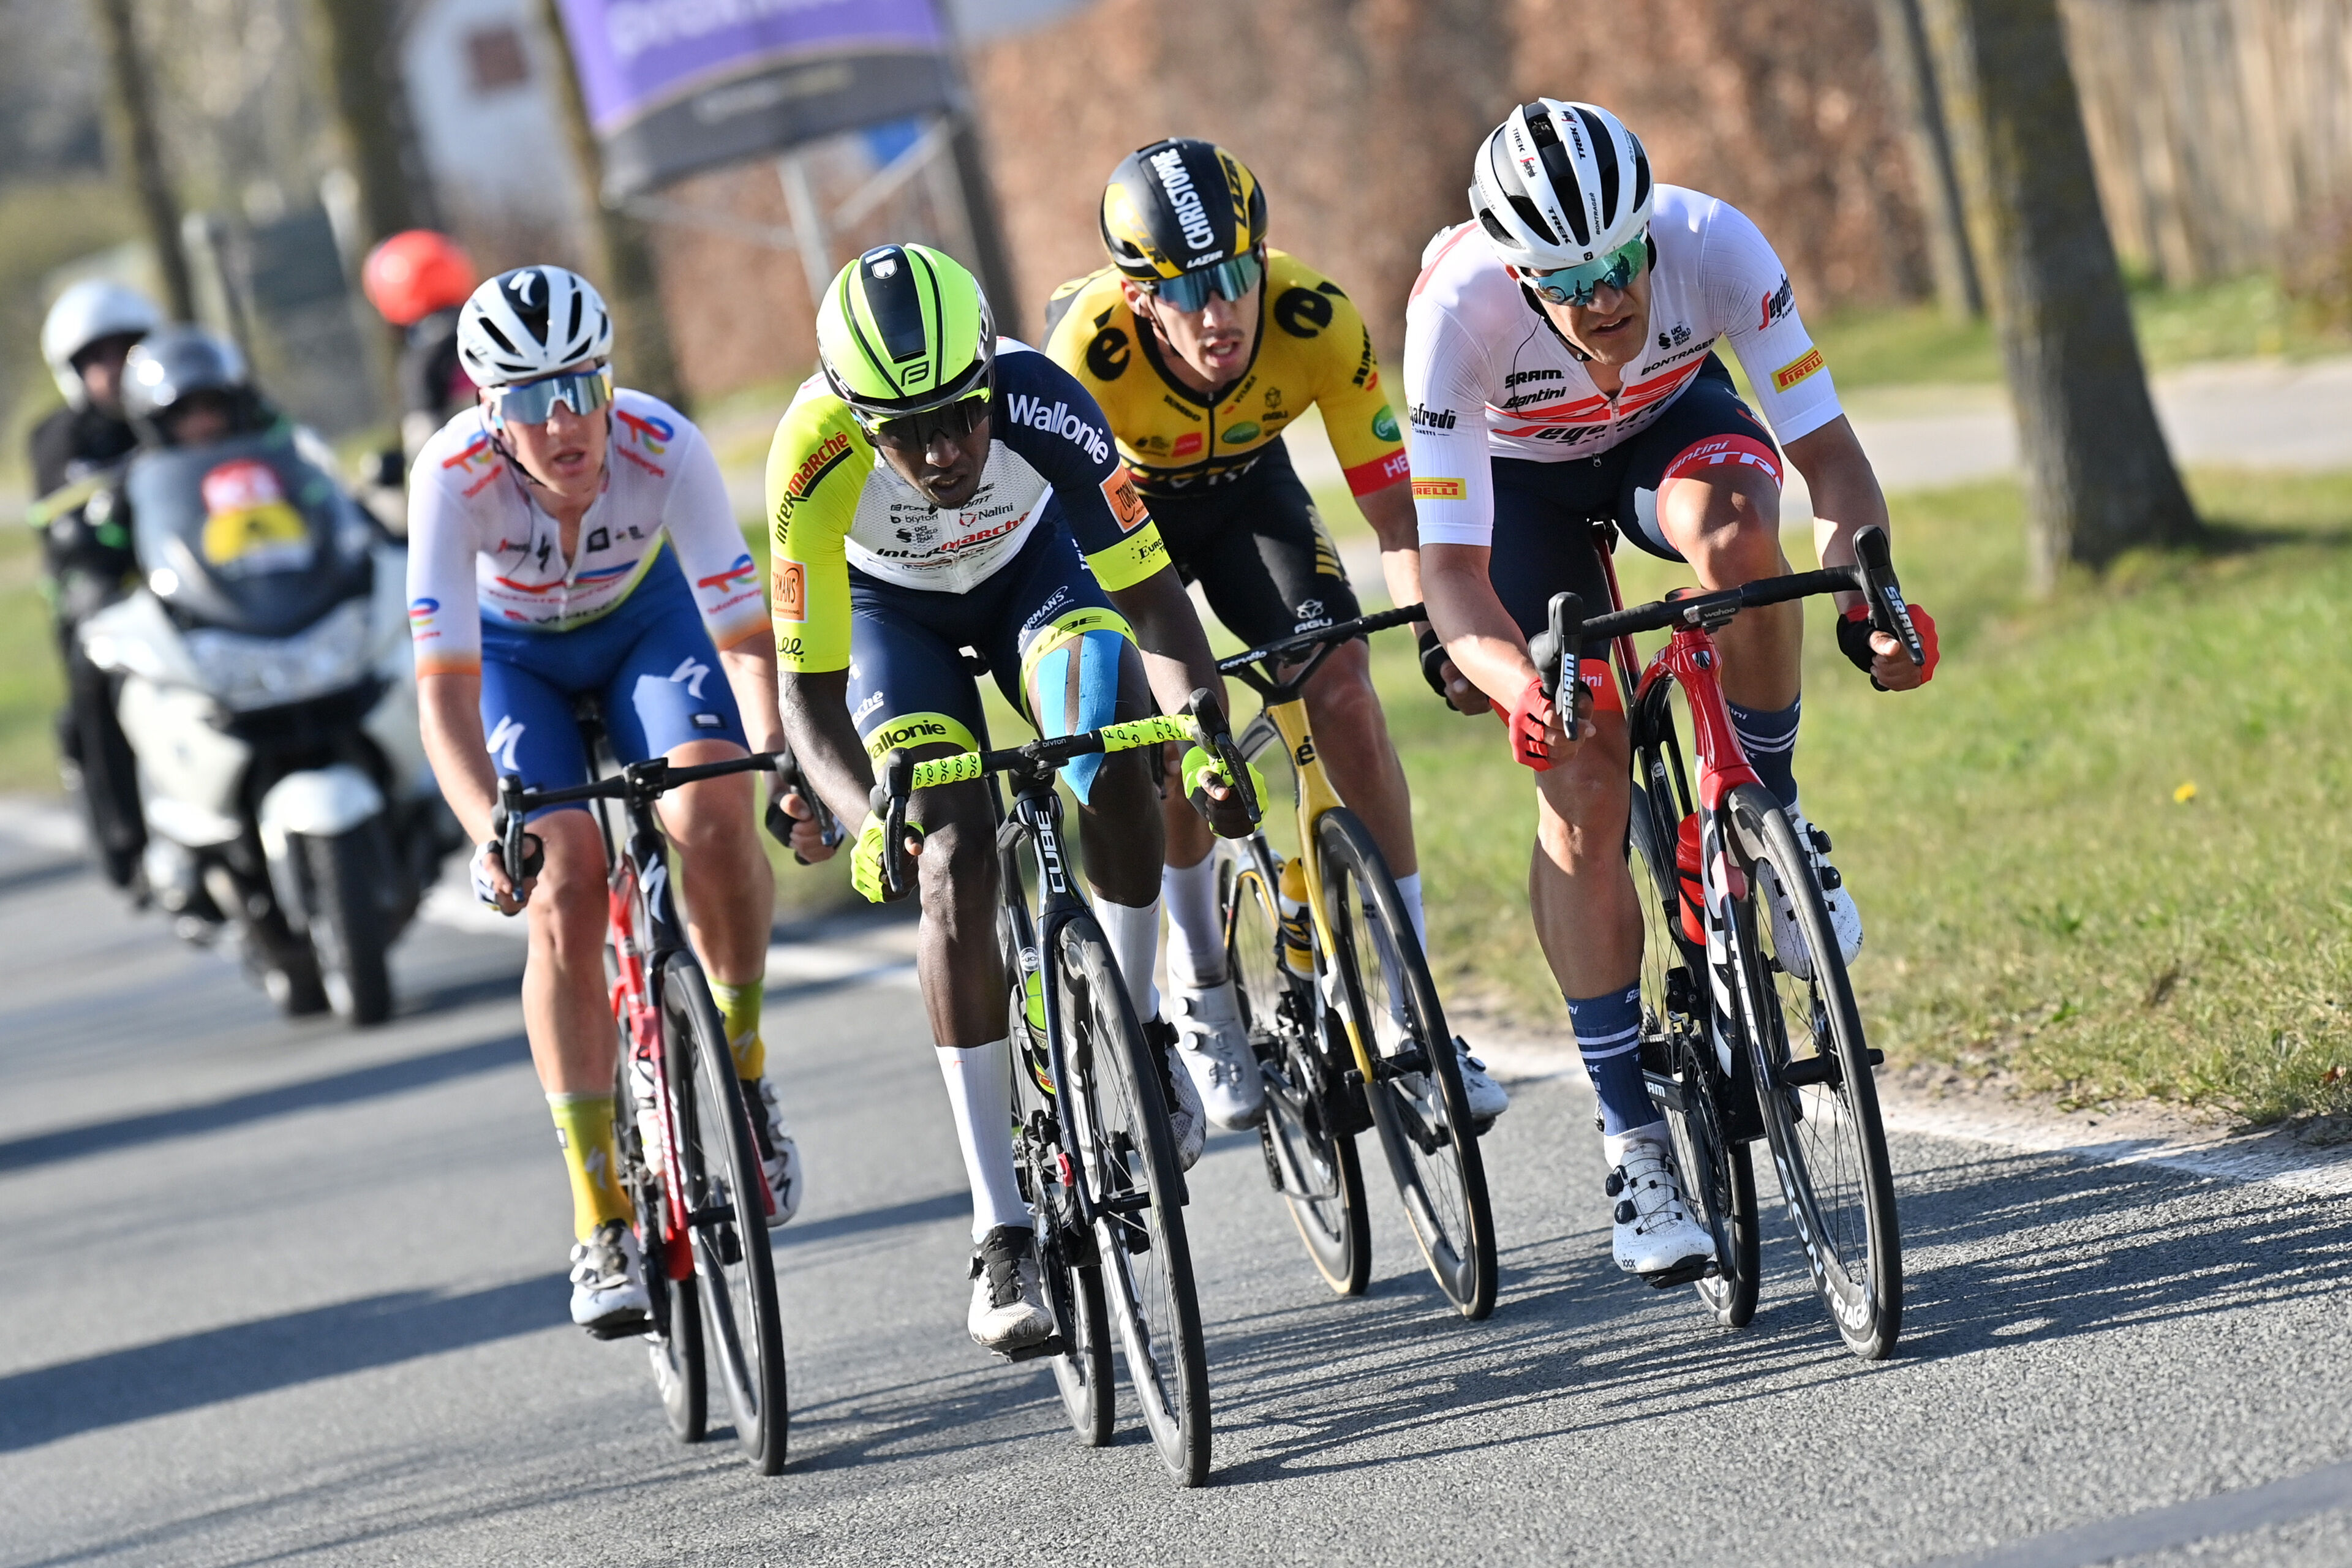 Sick Dries Van Gestel imperdibile tour delle Fiandre |  Giro delle Fiandre 2022